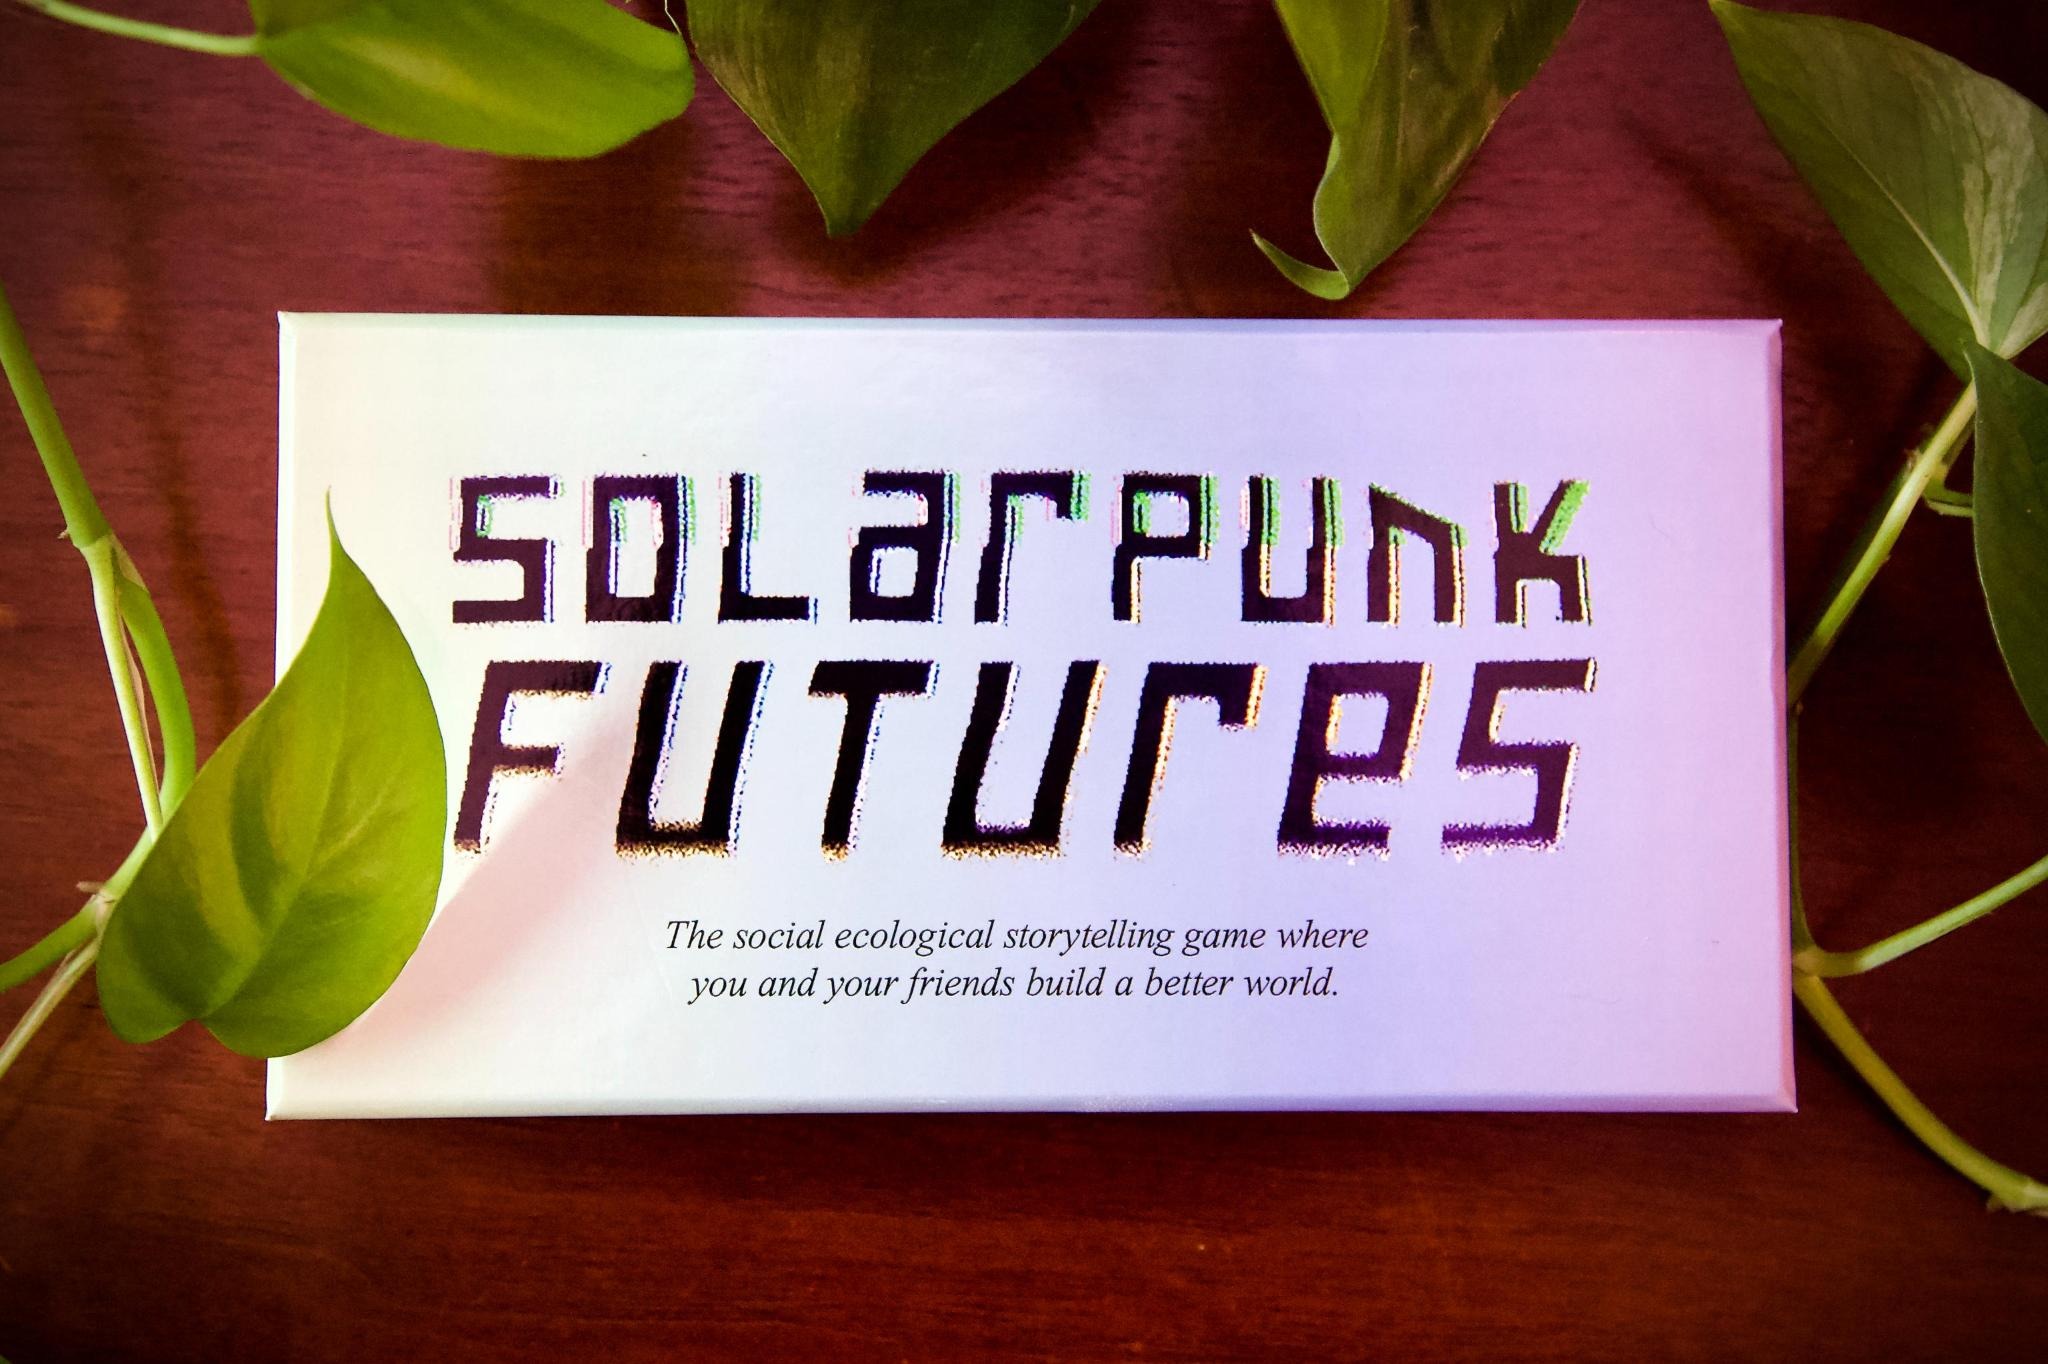 Download Loopmasters Solarpunk Futures